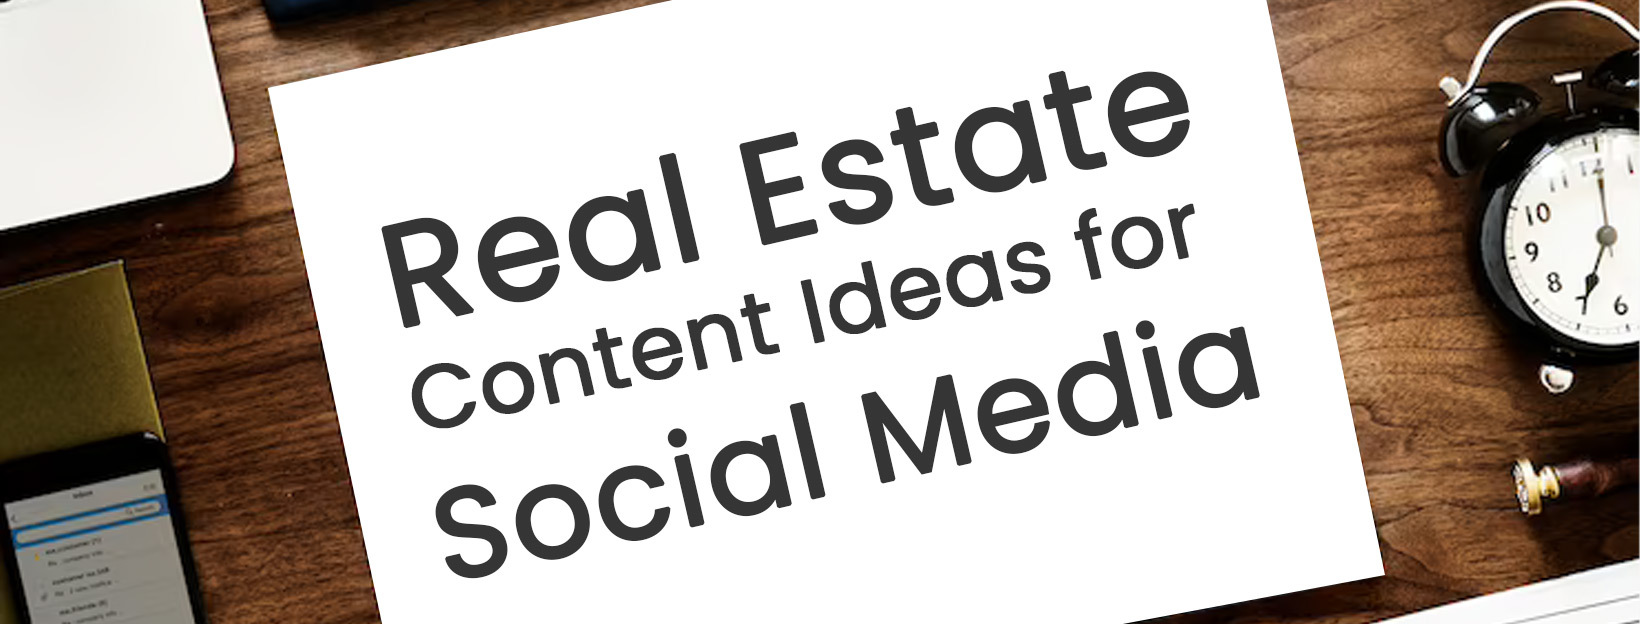 real-estate-content-ideas-for-social-media